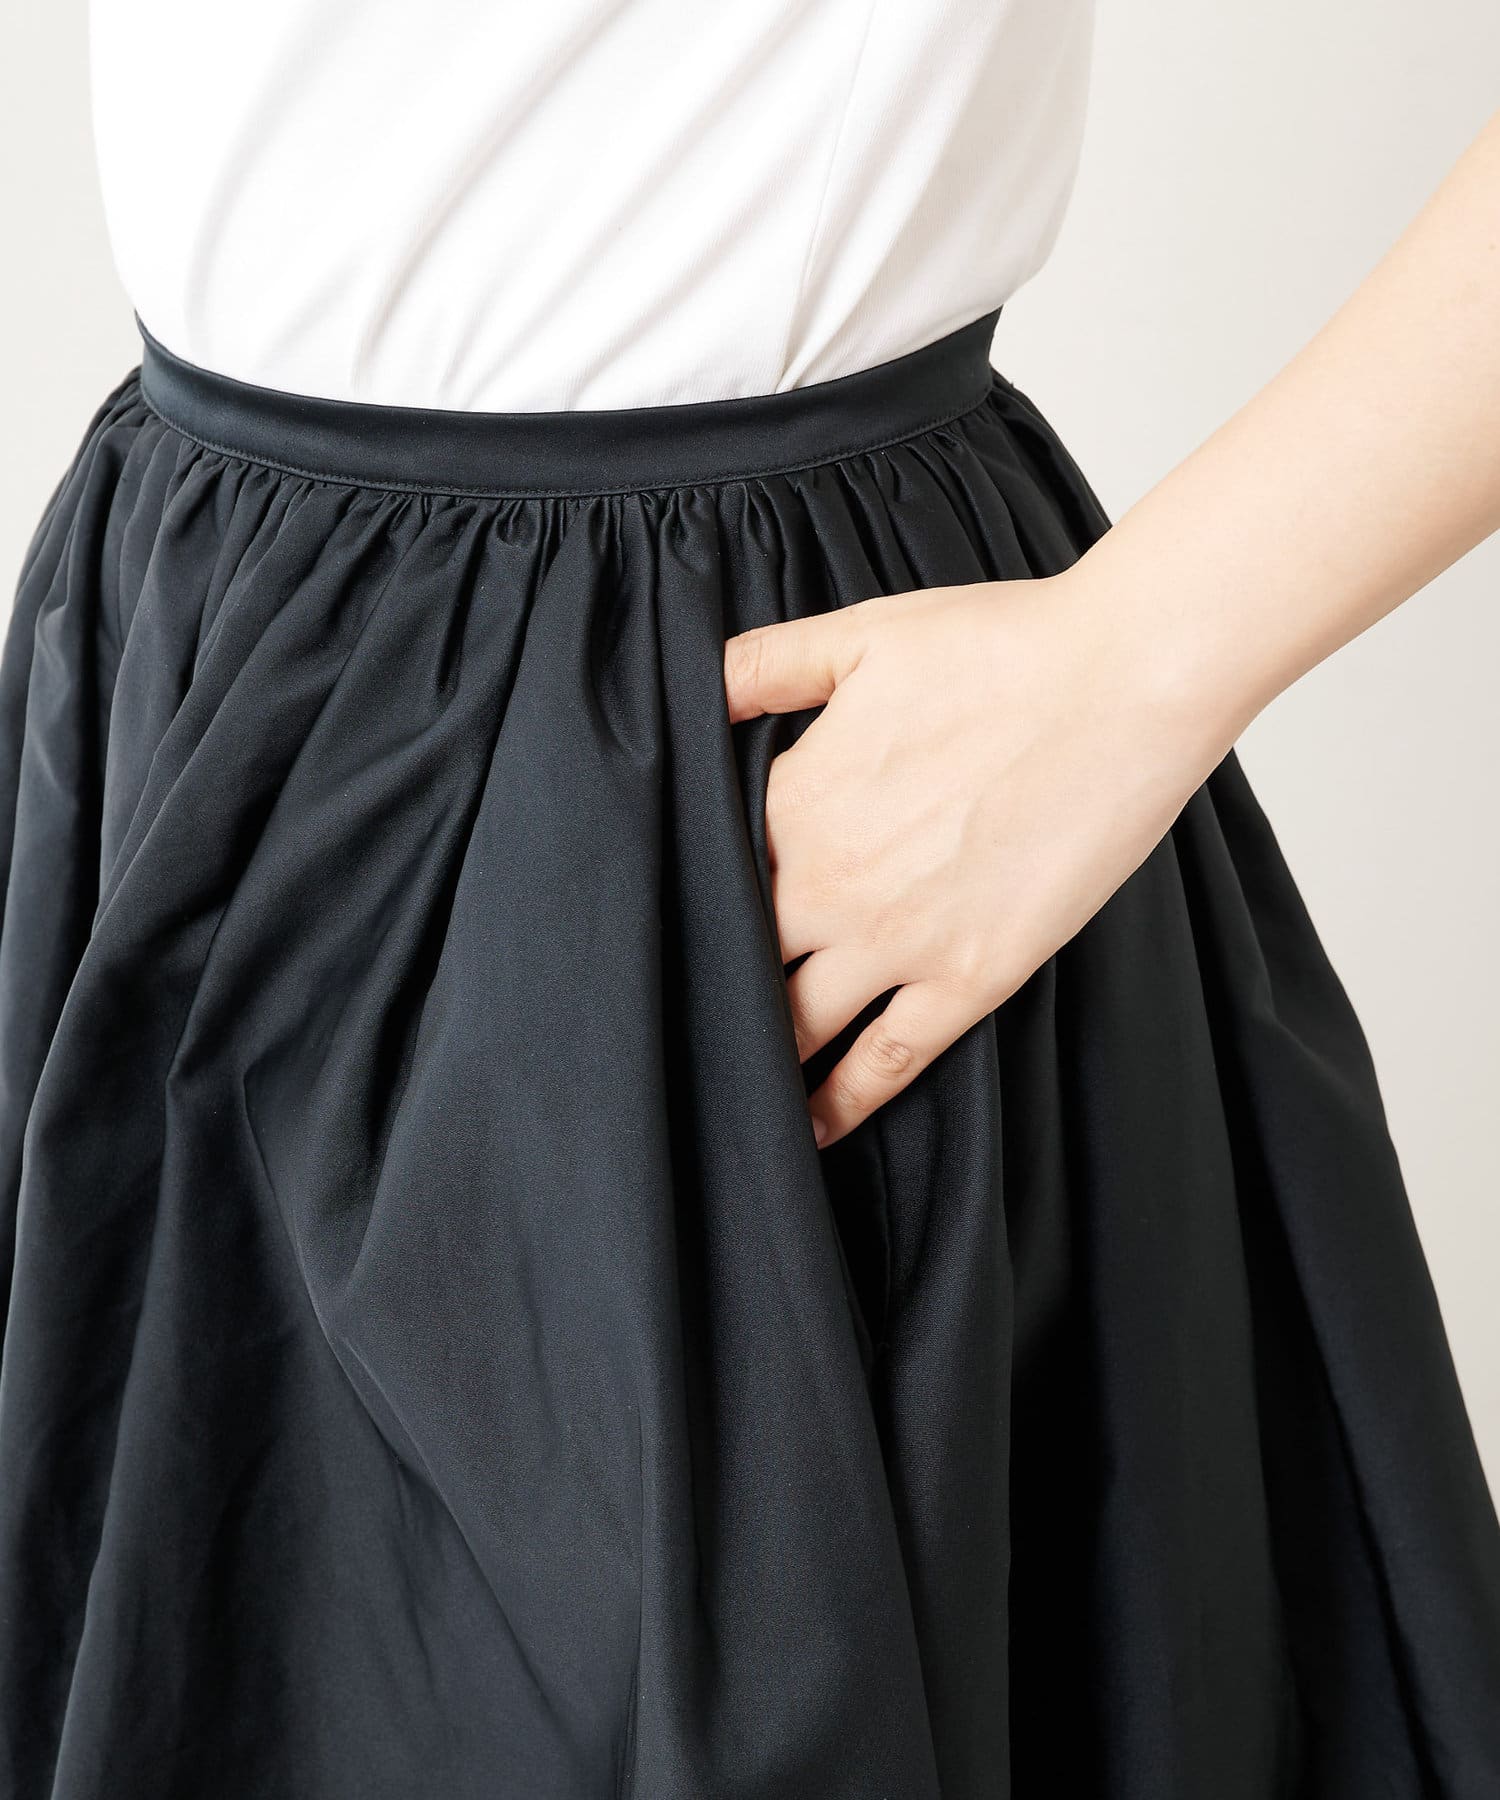 aLORS MINUIT スカート商品確認の為開封しましたが - www.danielsousa